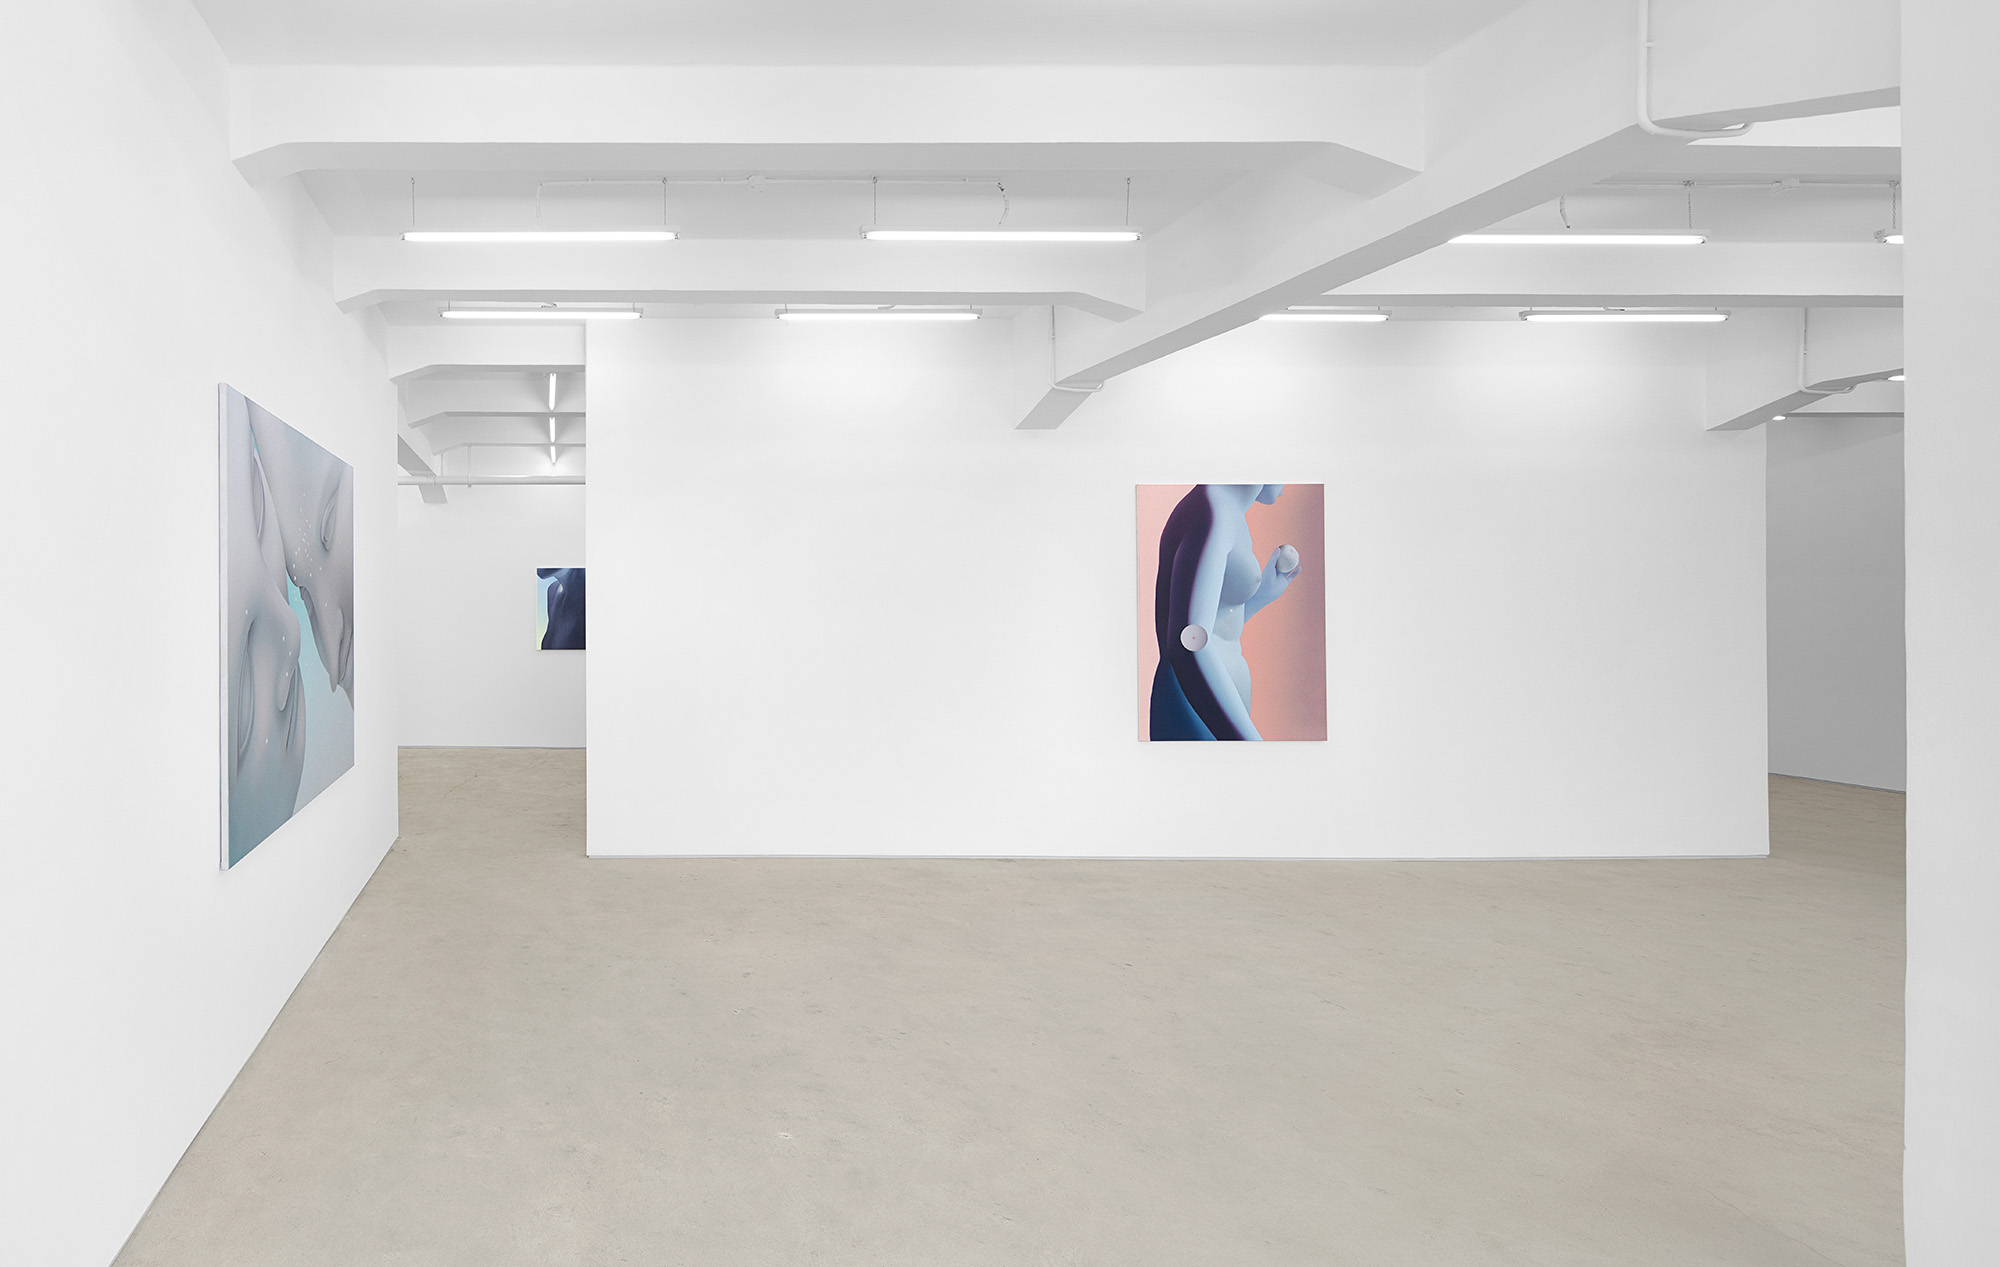 Vivian Greven, The Negatives, solo exhibition at Gallery Vacancy, installation view 7